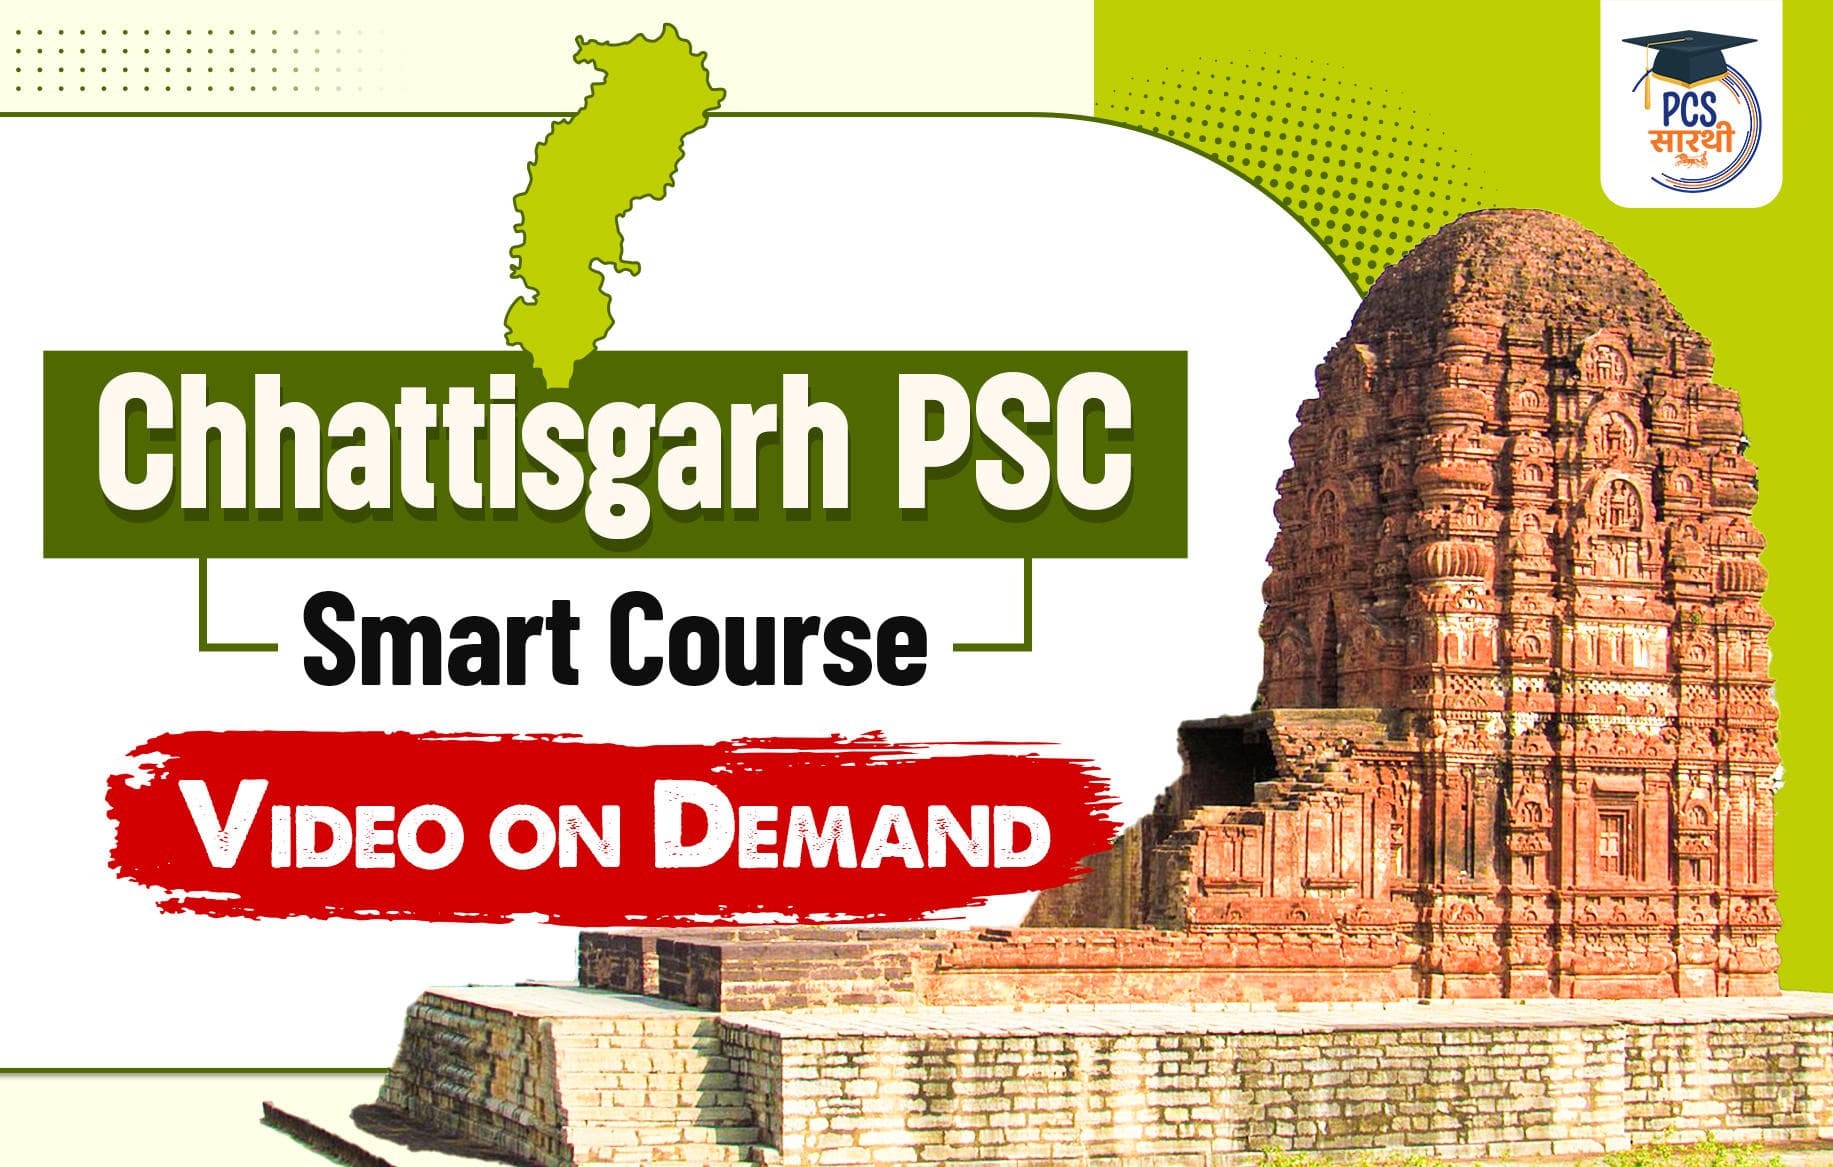 Chhattisgarh PSC (Pre + Mains)